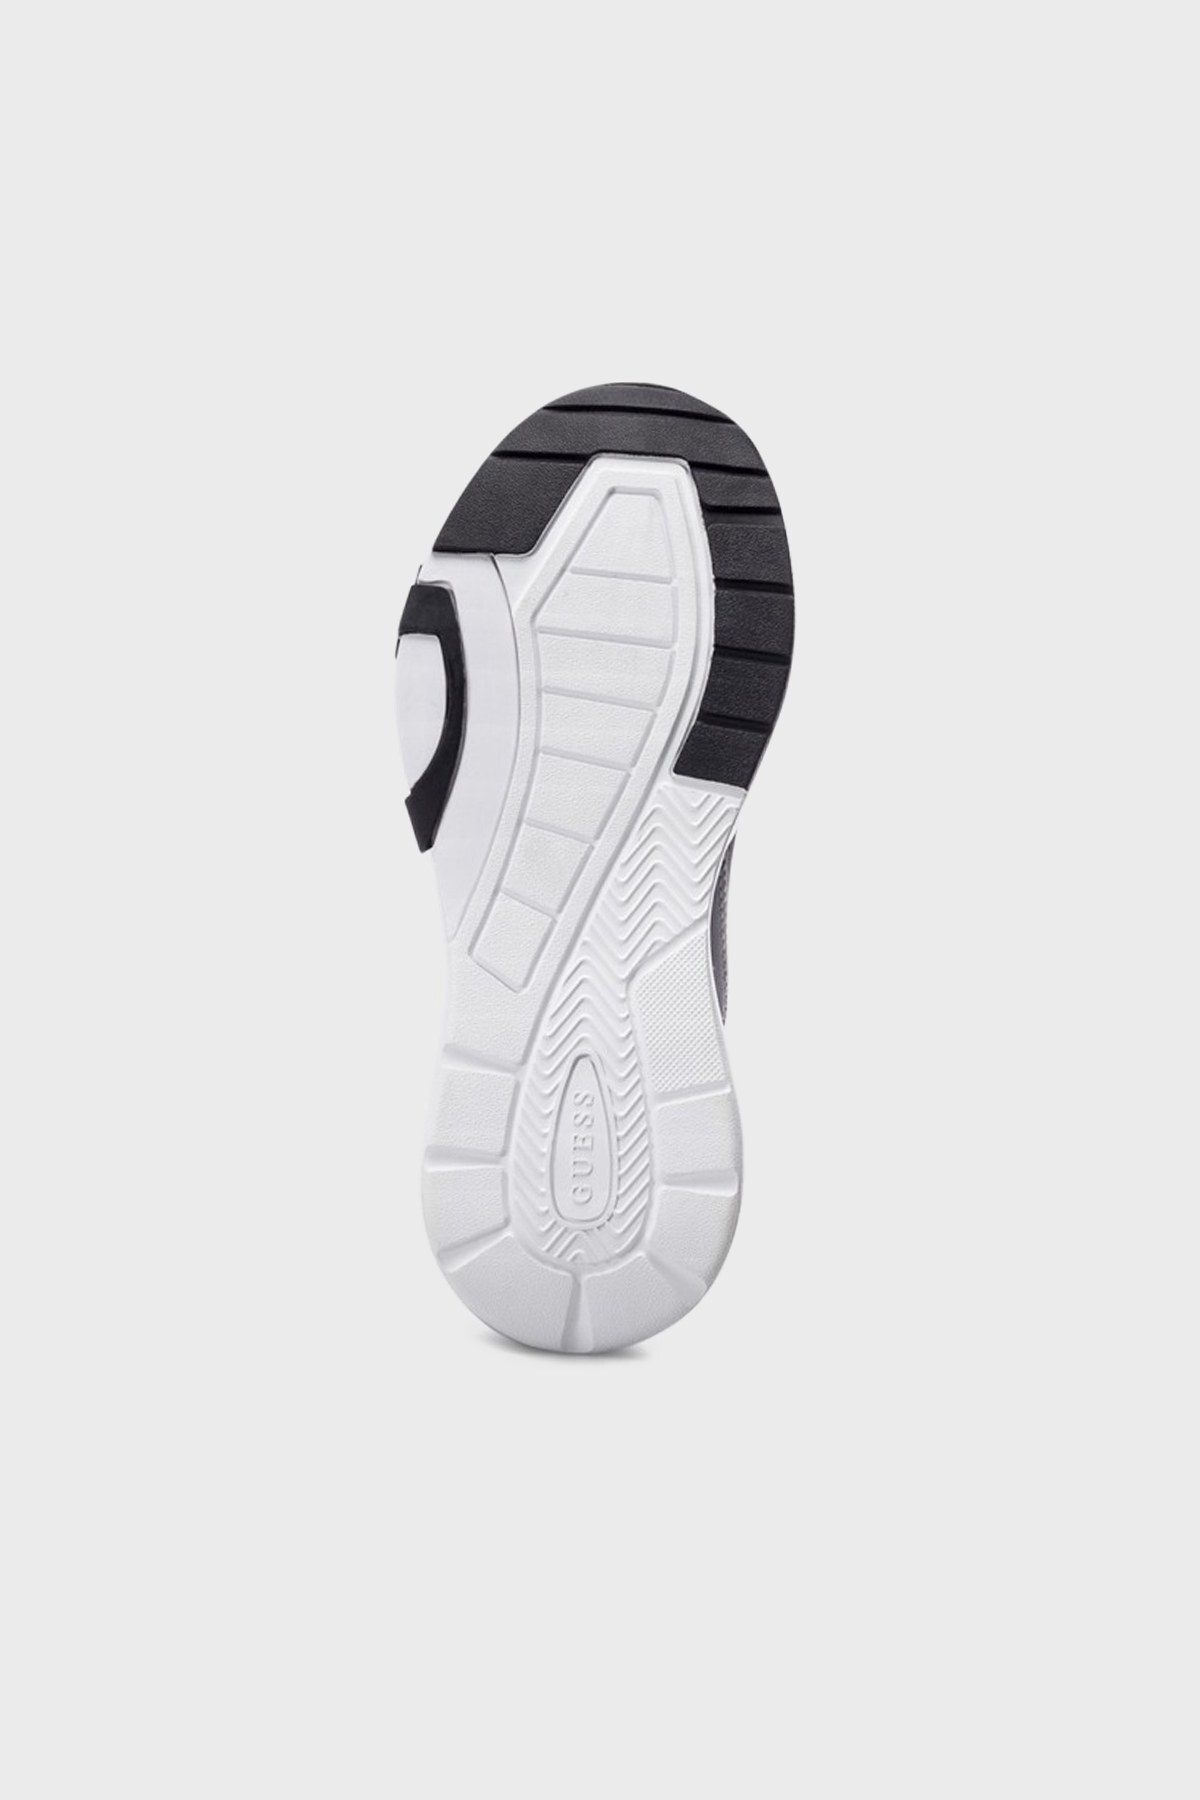 Guess Logolu Fermuar Detaylı Sneaker Bayan Ayakkabı FL8BIAFAB12 GREY SİYAH-GRİ